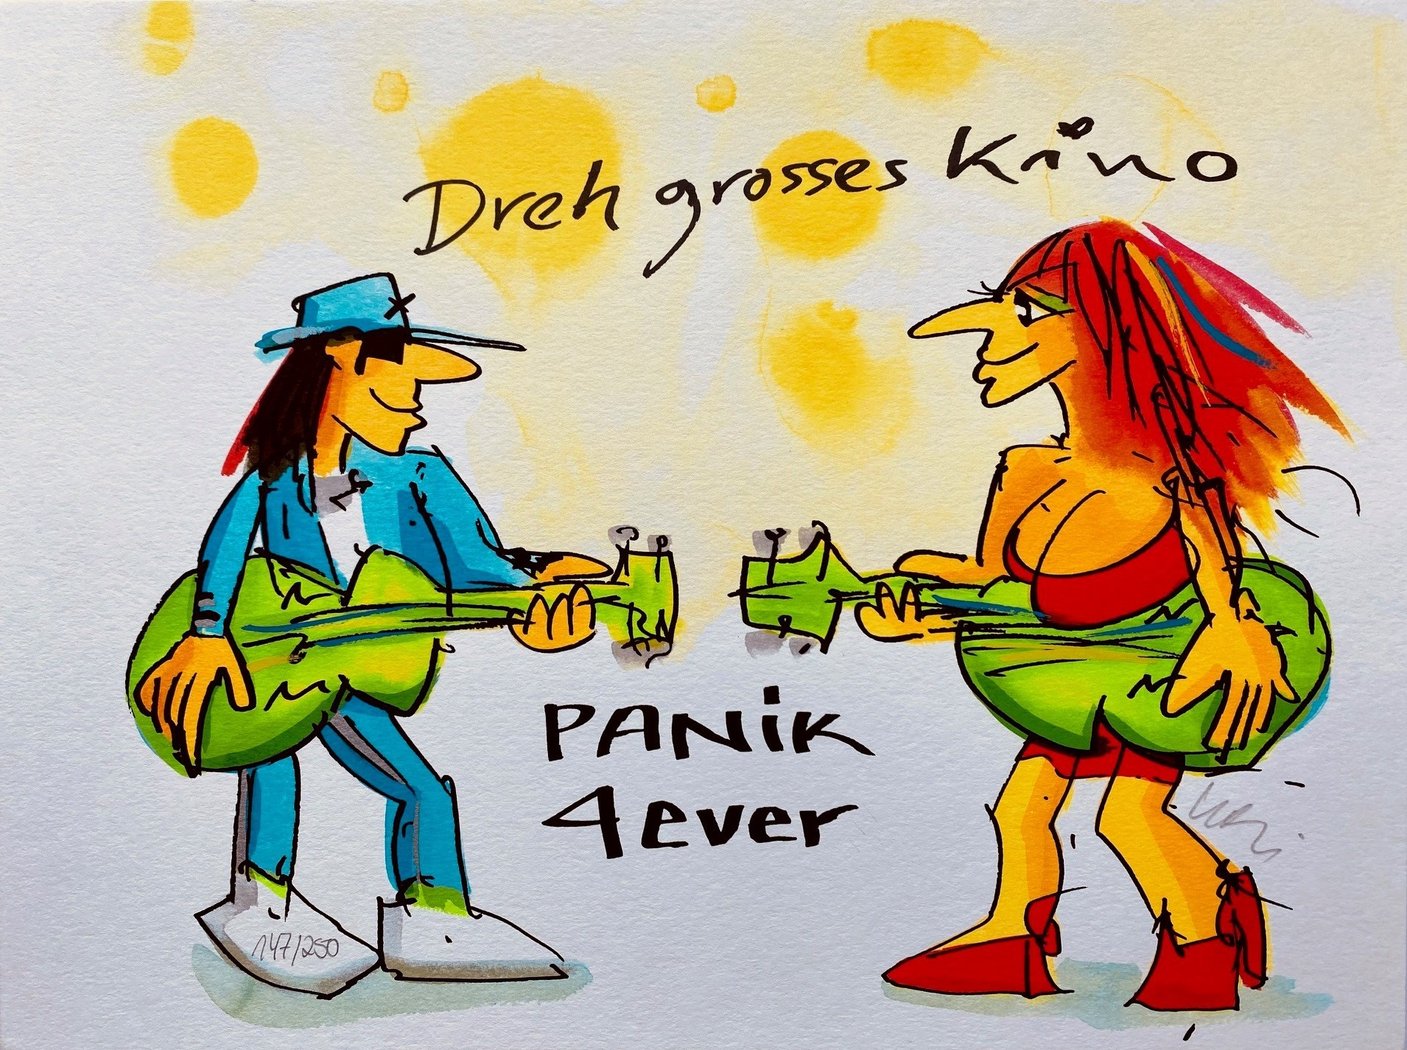 Udo Lindenberg - Panik 4ever - Dreh grosses Kino